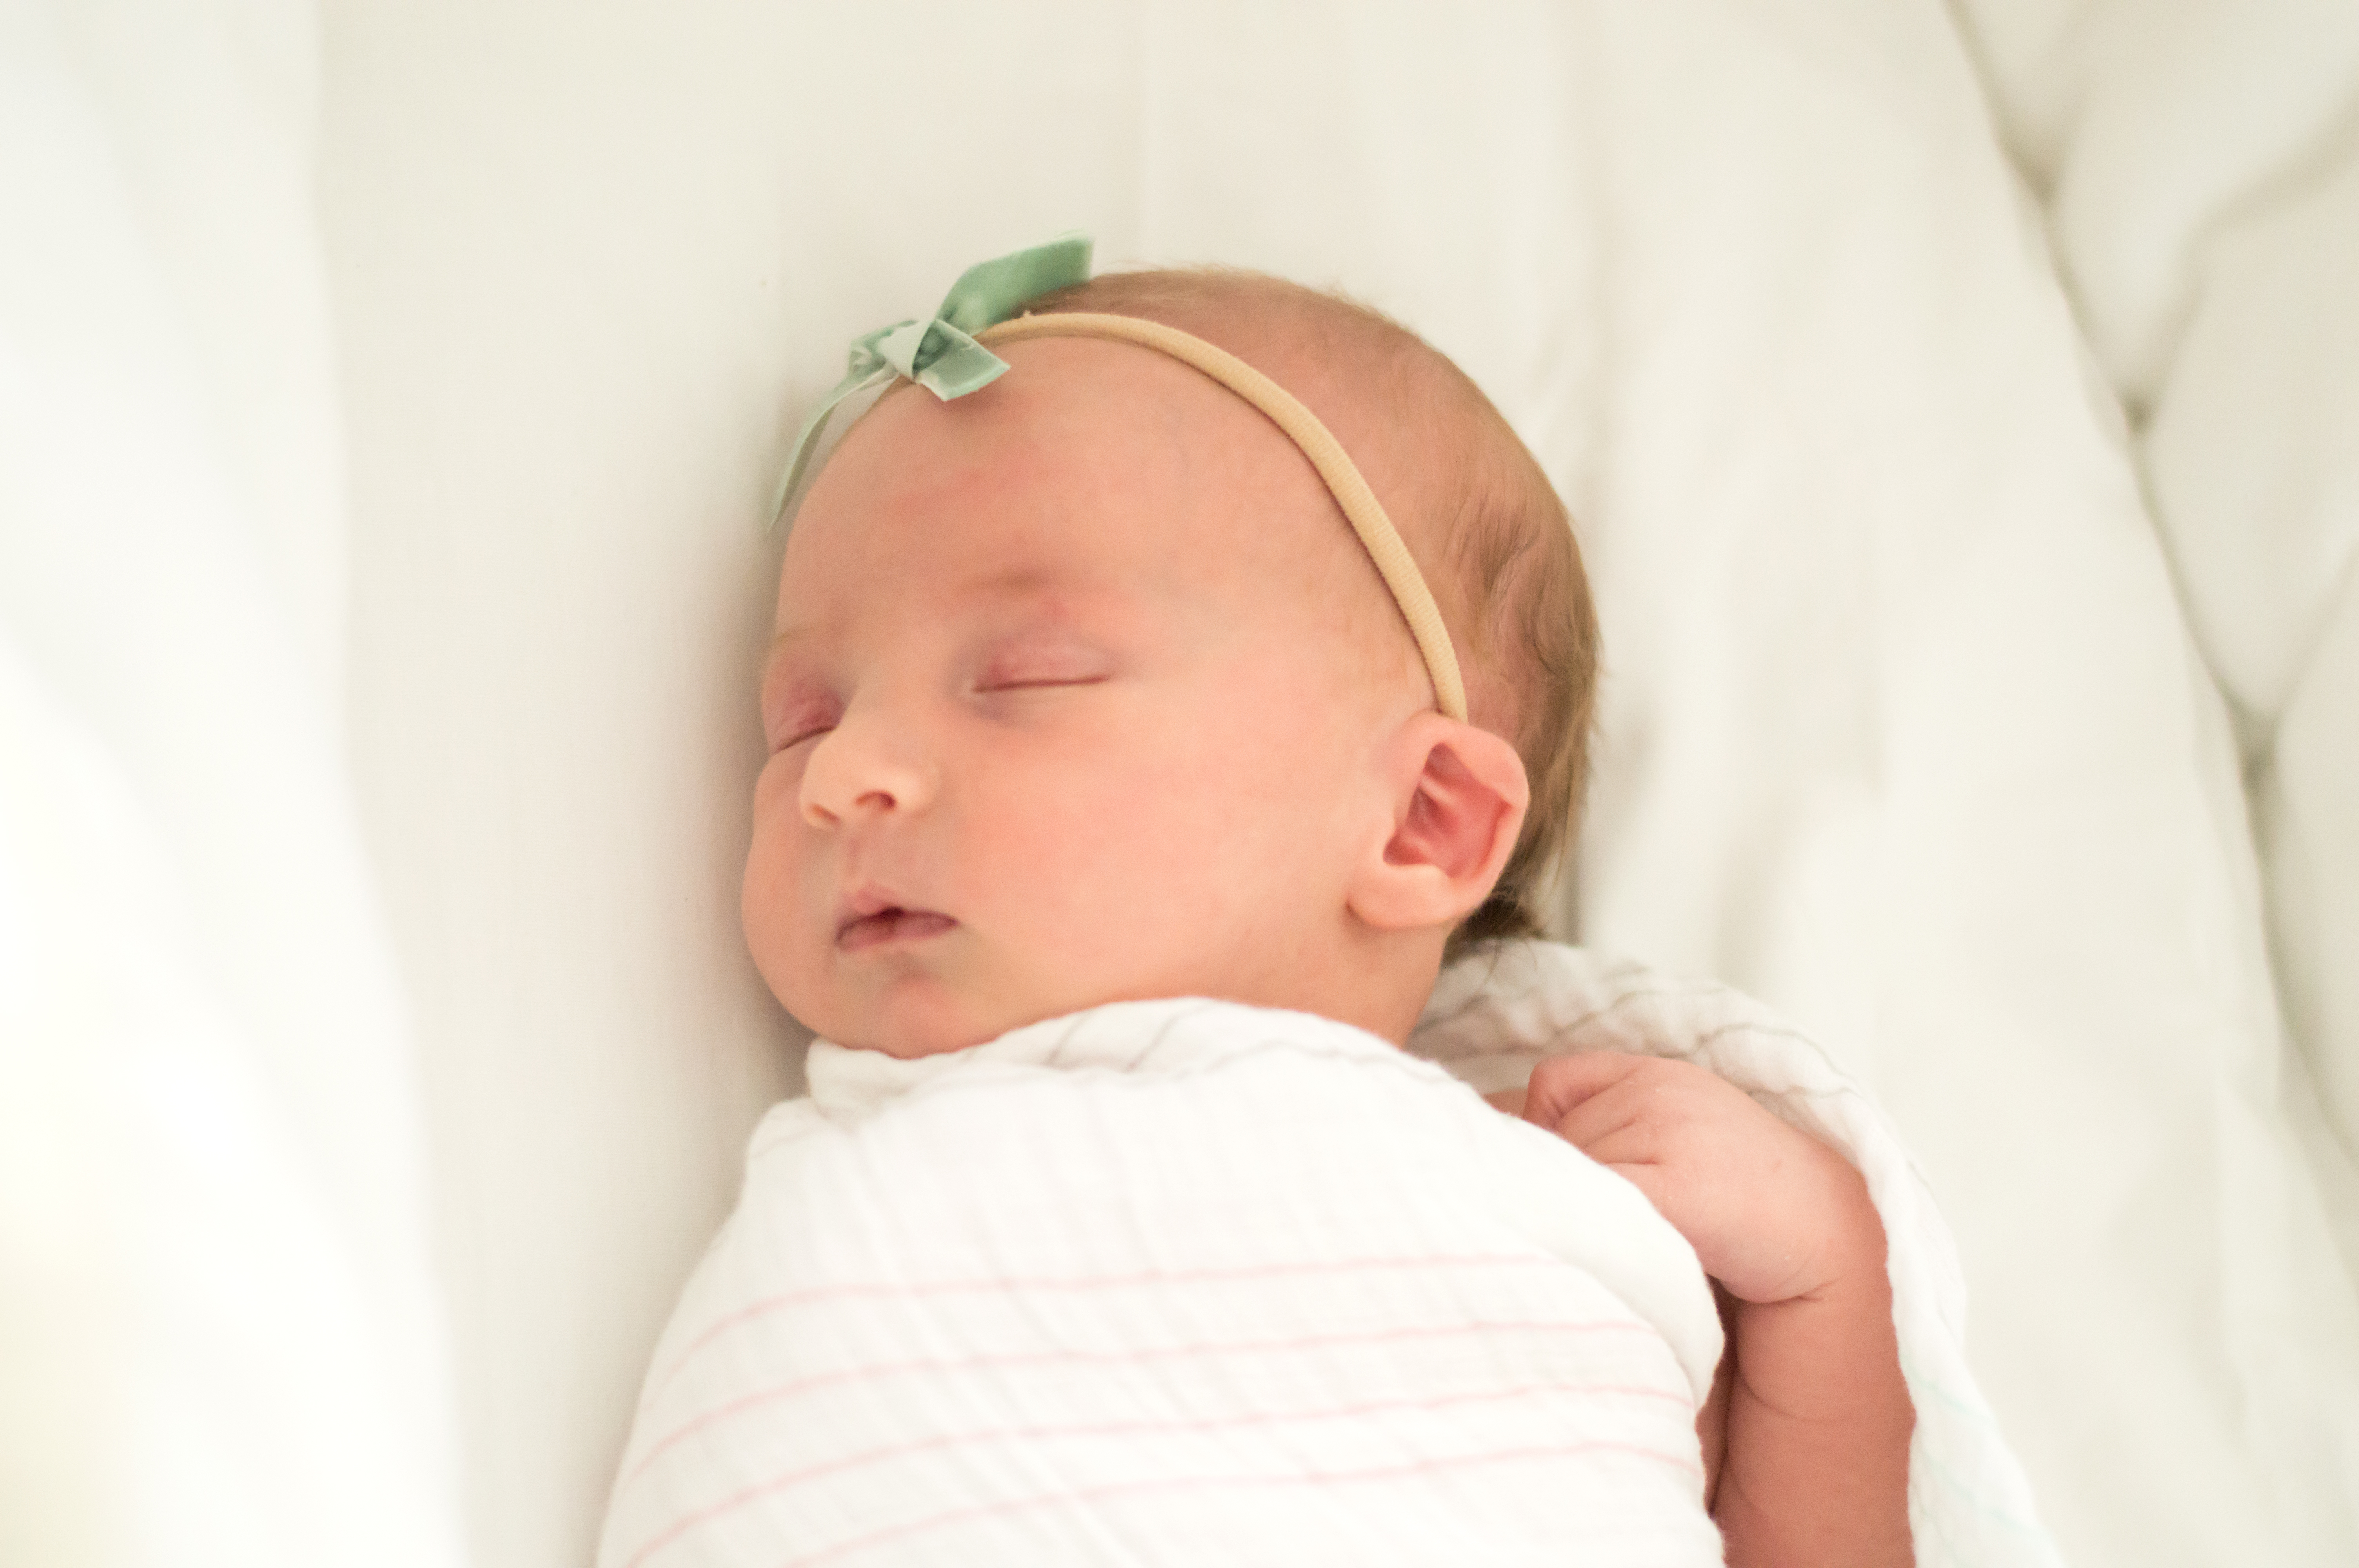 Newborn baby girl in green bow sleeping in bassinet.